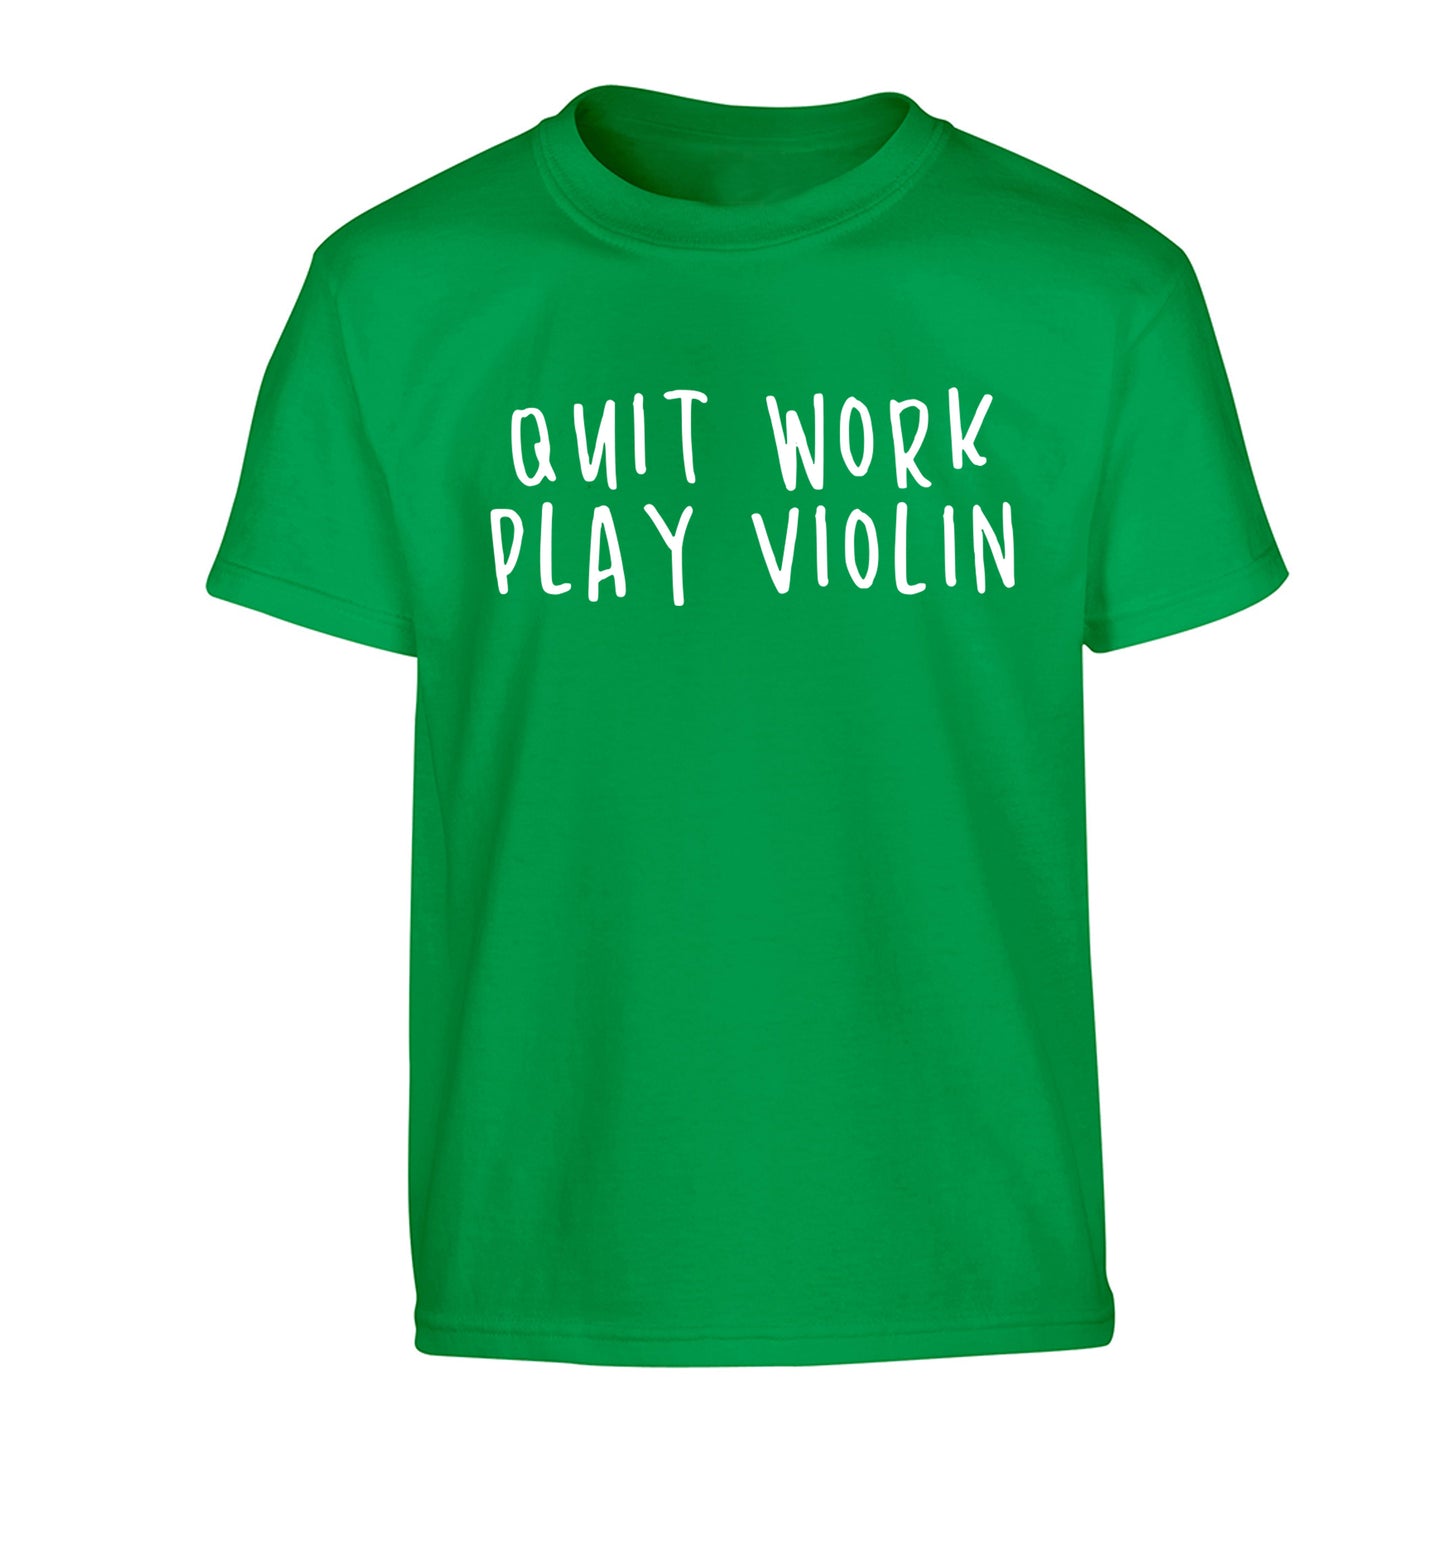 Quit work play violin Children's green Tshirt 12-13 Years